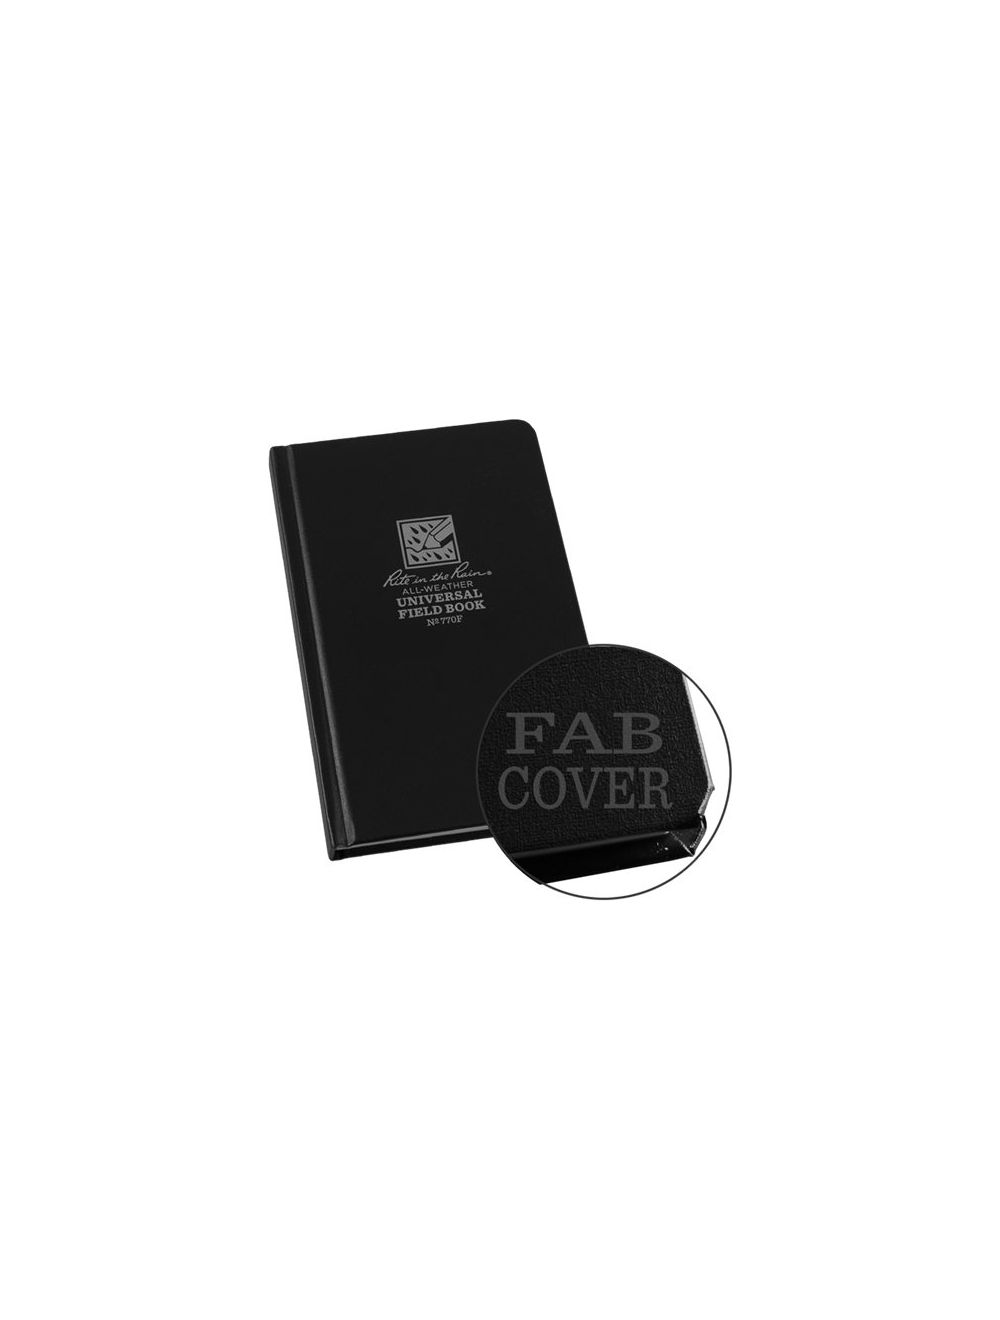 Fabrikoid Hard Cover Notebook - Black (4.75'' x 7.5'')